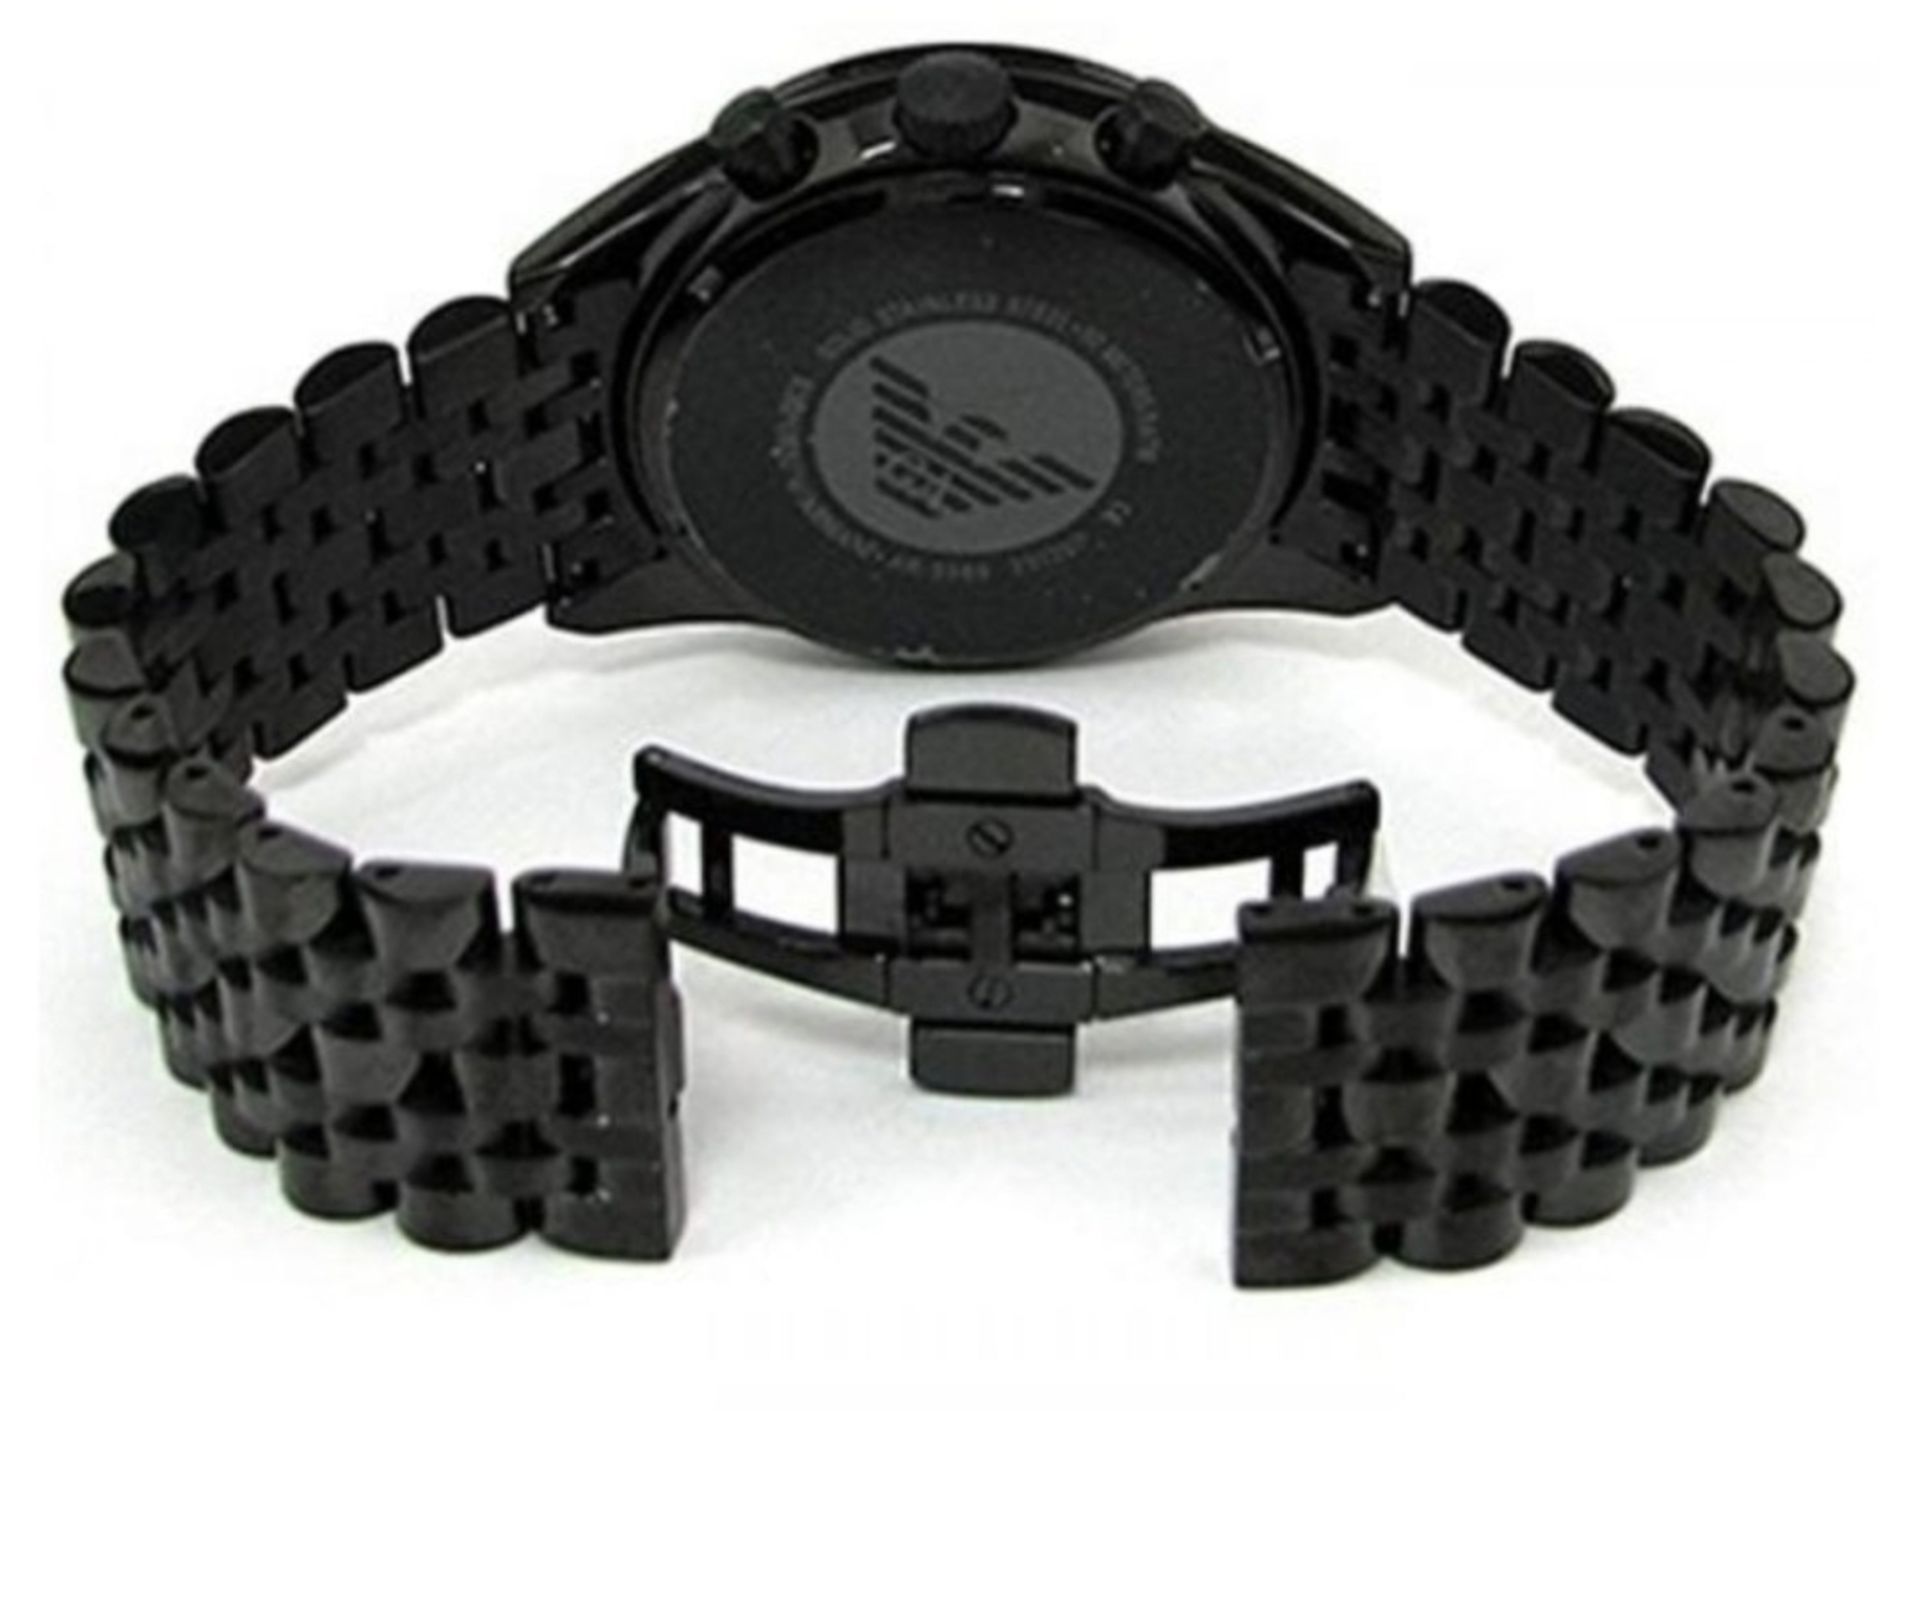 Emporio Armani AR5989 Men's Tazio Black Stainless Steel Bracelet Chronograph Watch - Image 8 of 9